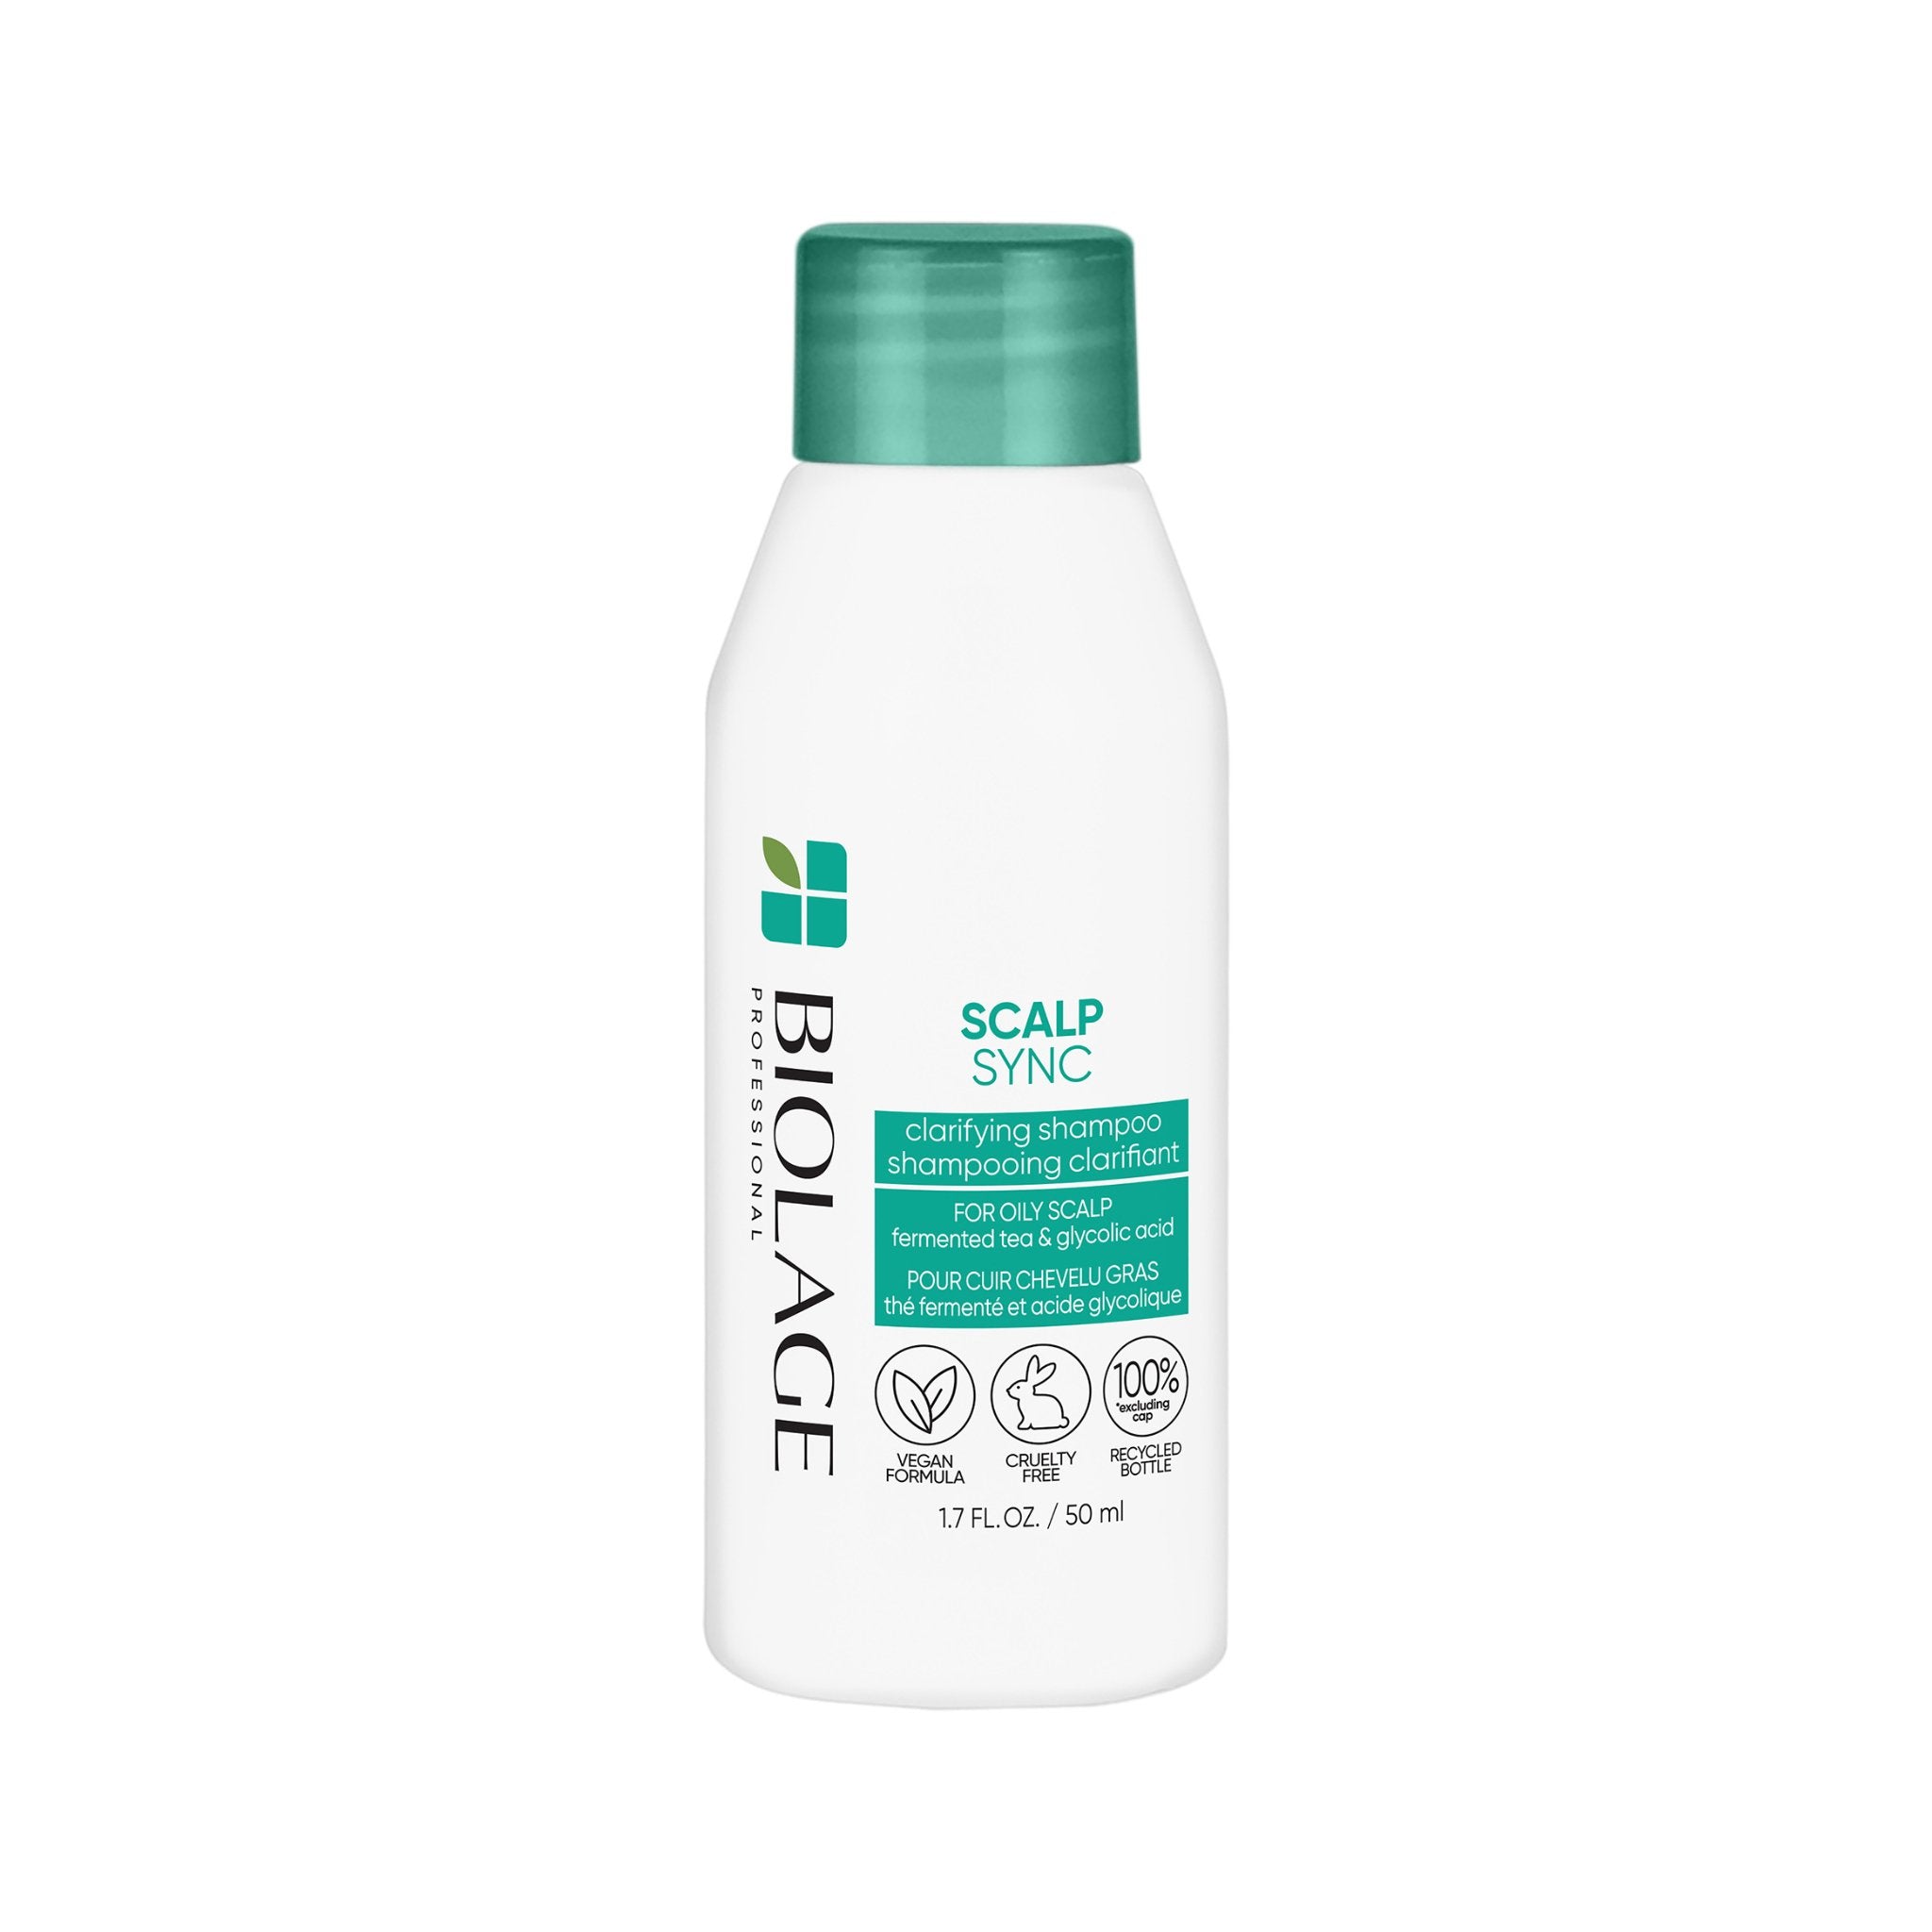 Biolage. Shampoing Clarifiant Scalp Sync - 50 ml - Concept C. Shop